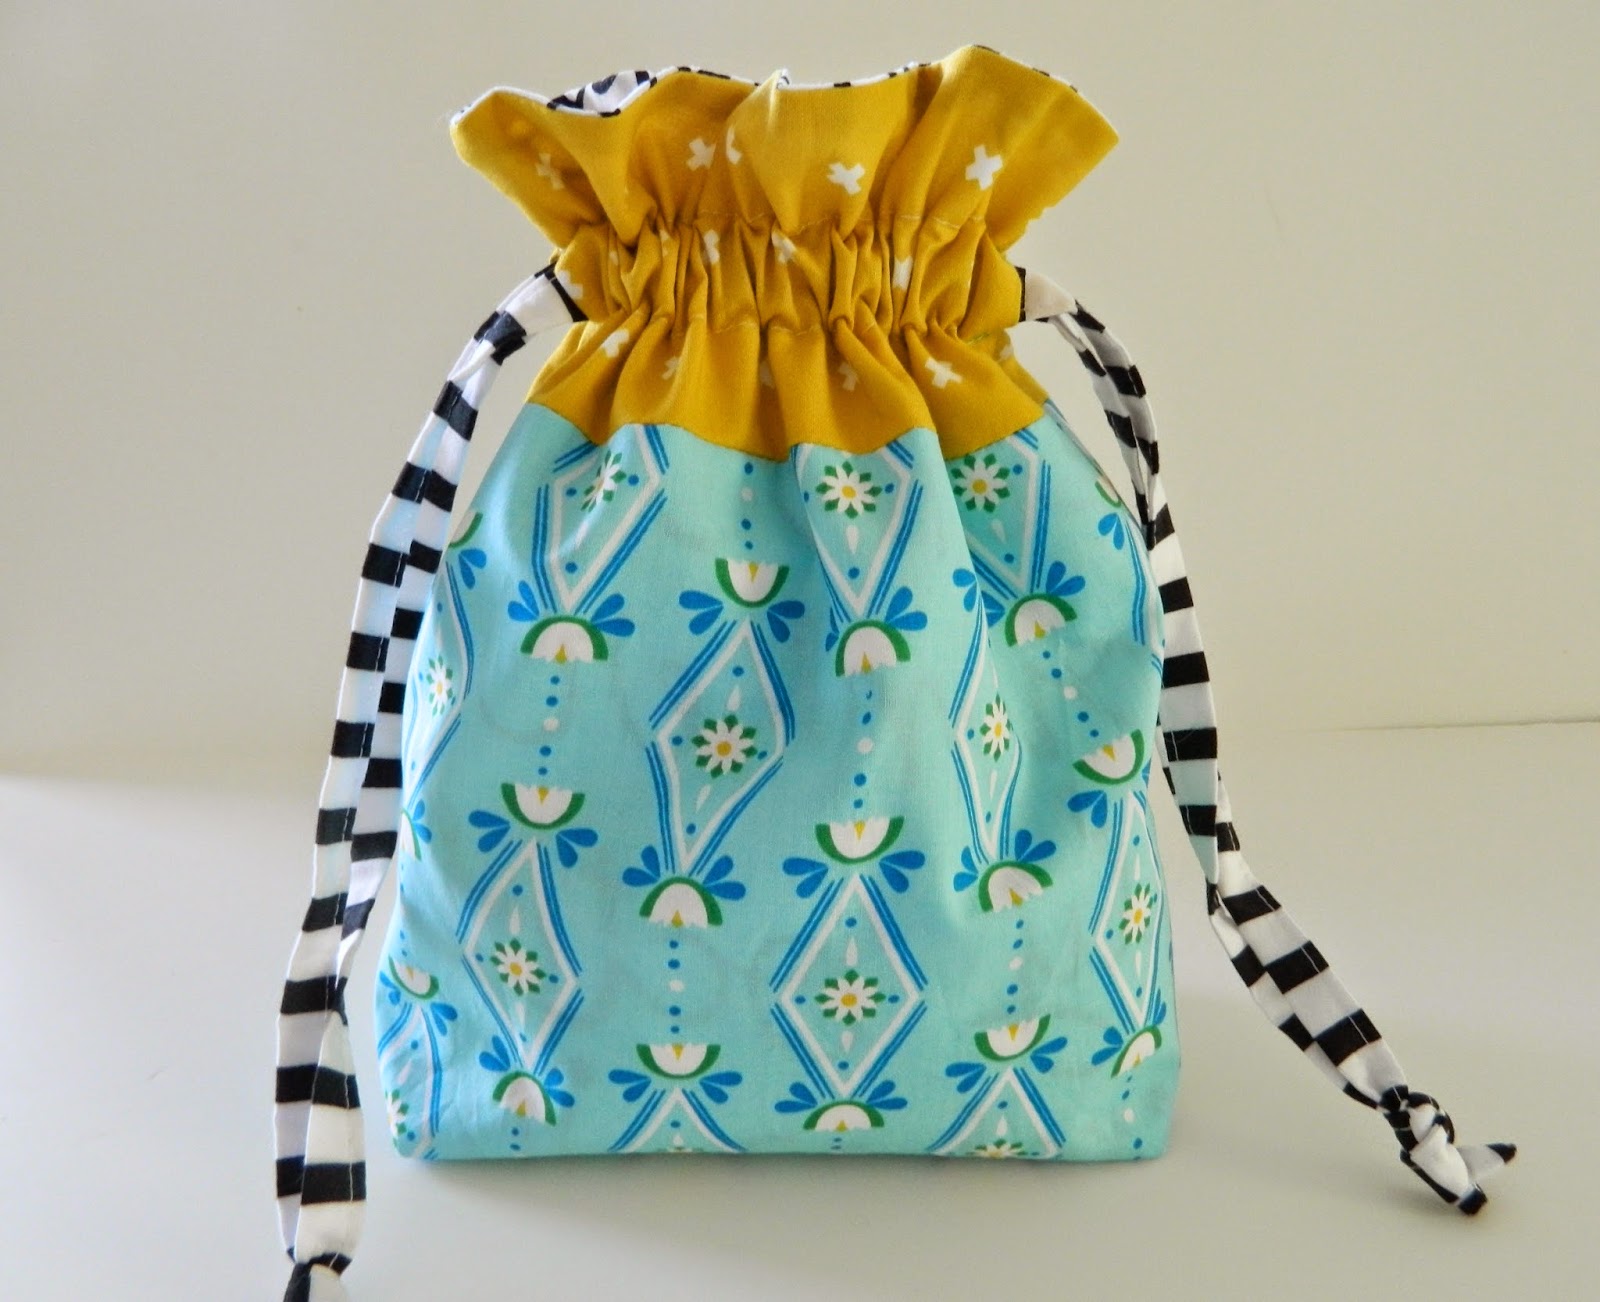 s.o.t.a.k handmade: my knitting bag